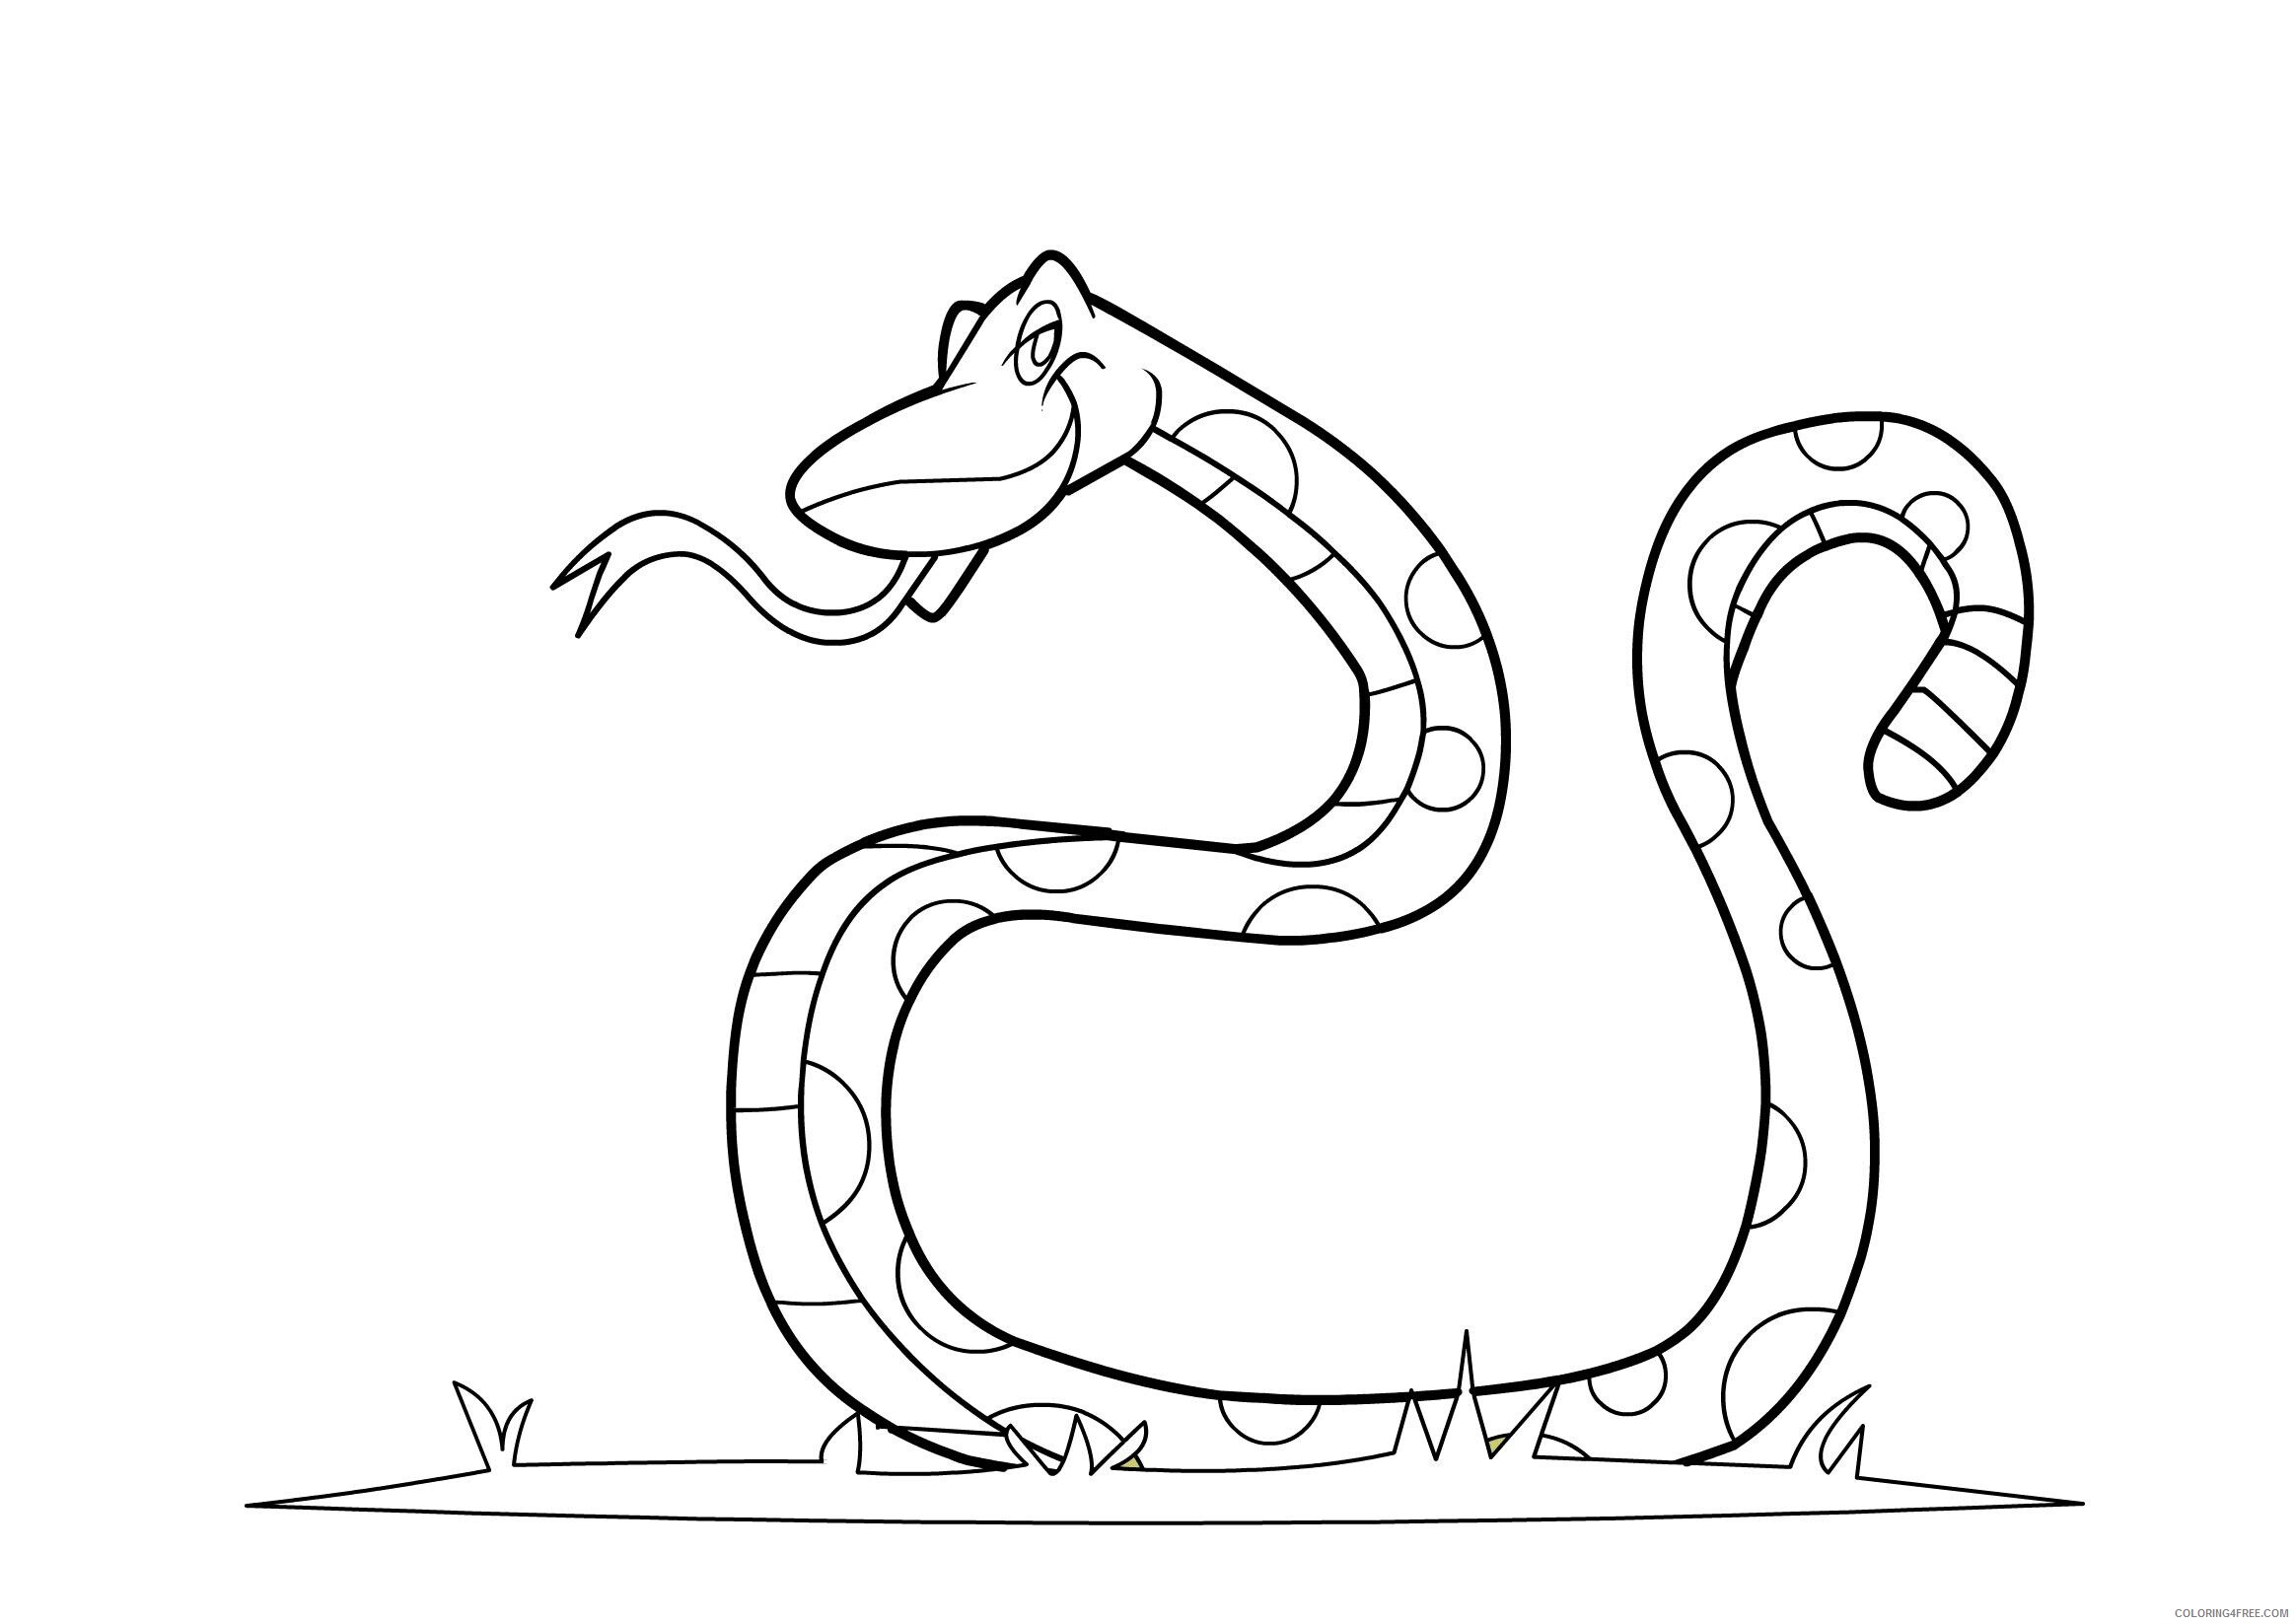 Snake Coloring Pages Animal Printable Sheets Snake Kids 2021 4570 Coloring4free